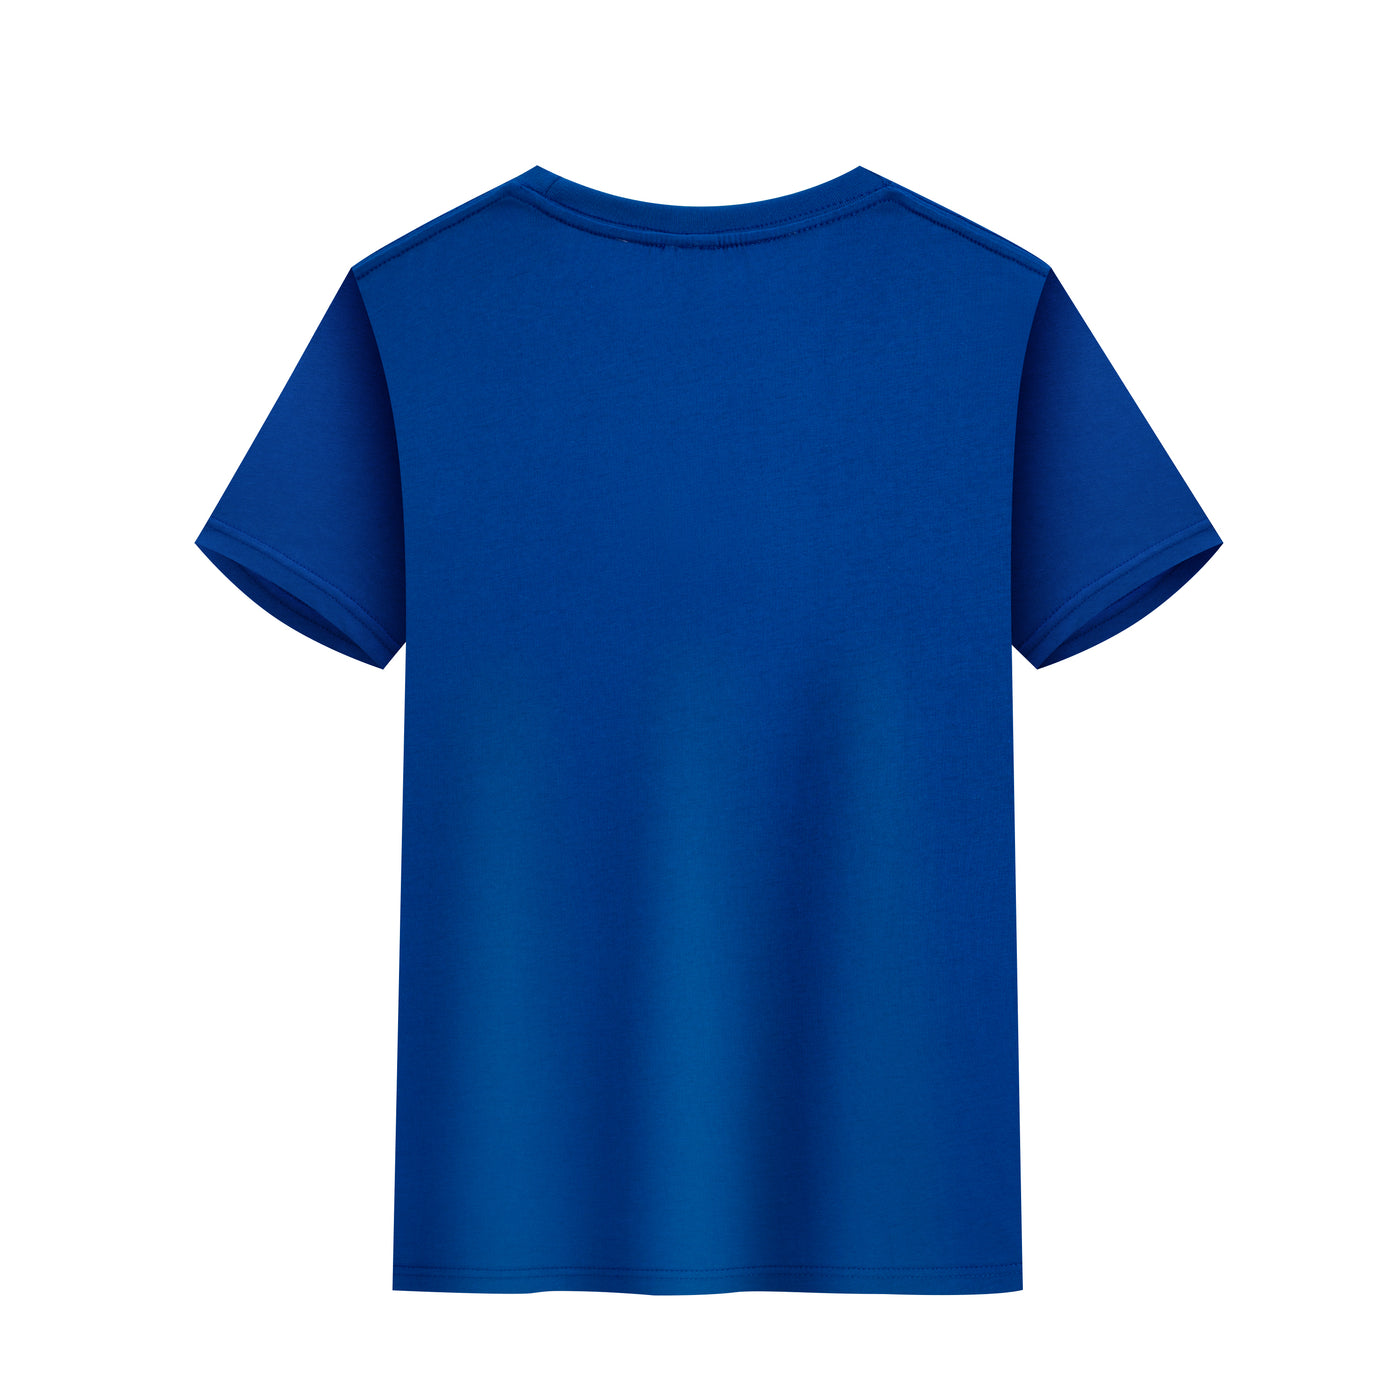 Outback King | T-shirt Royal Blue